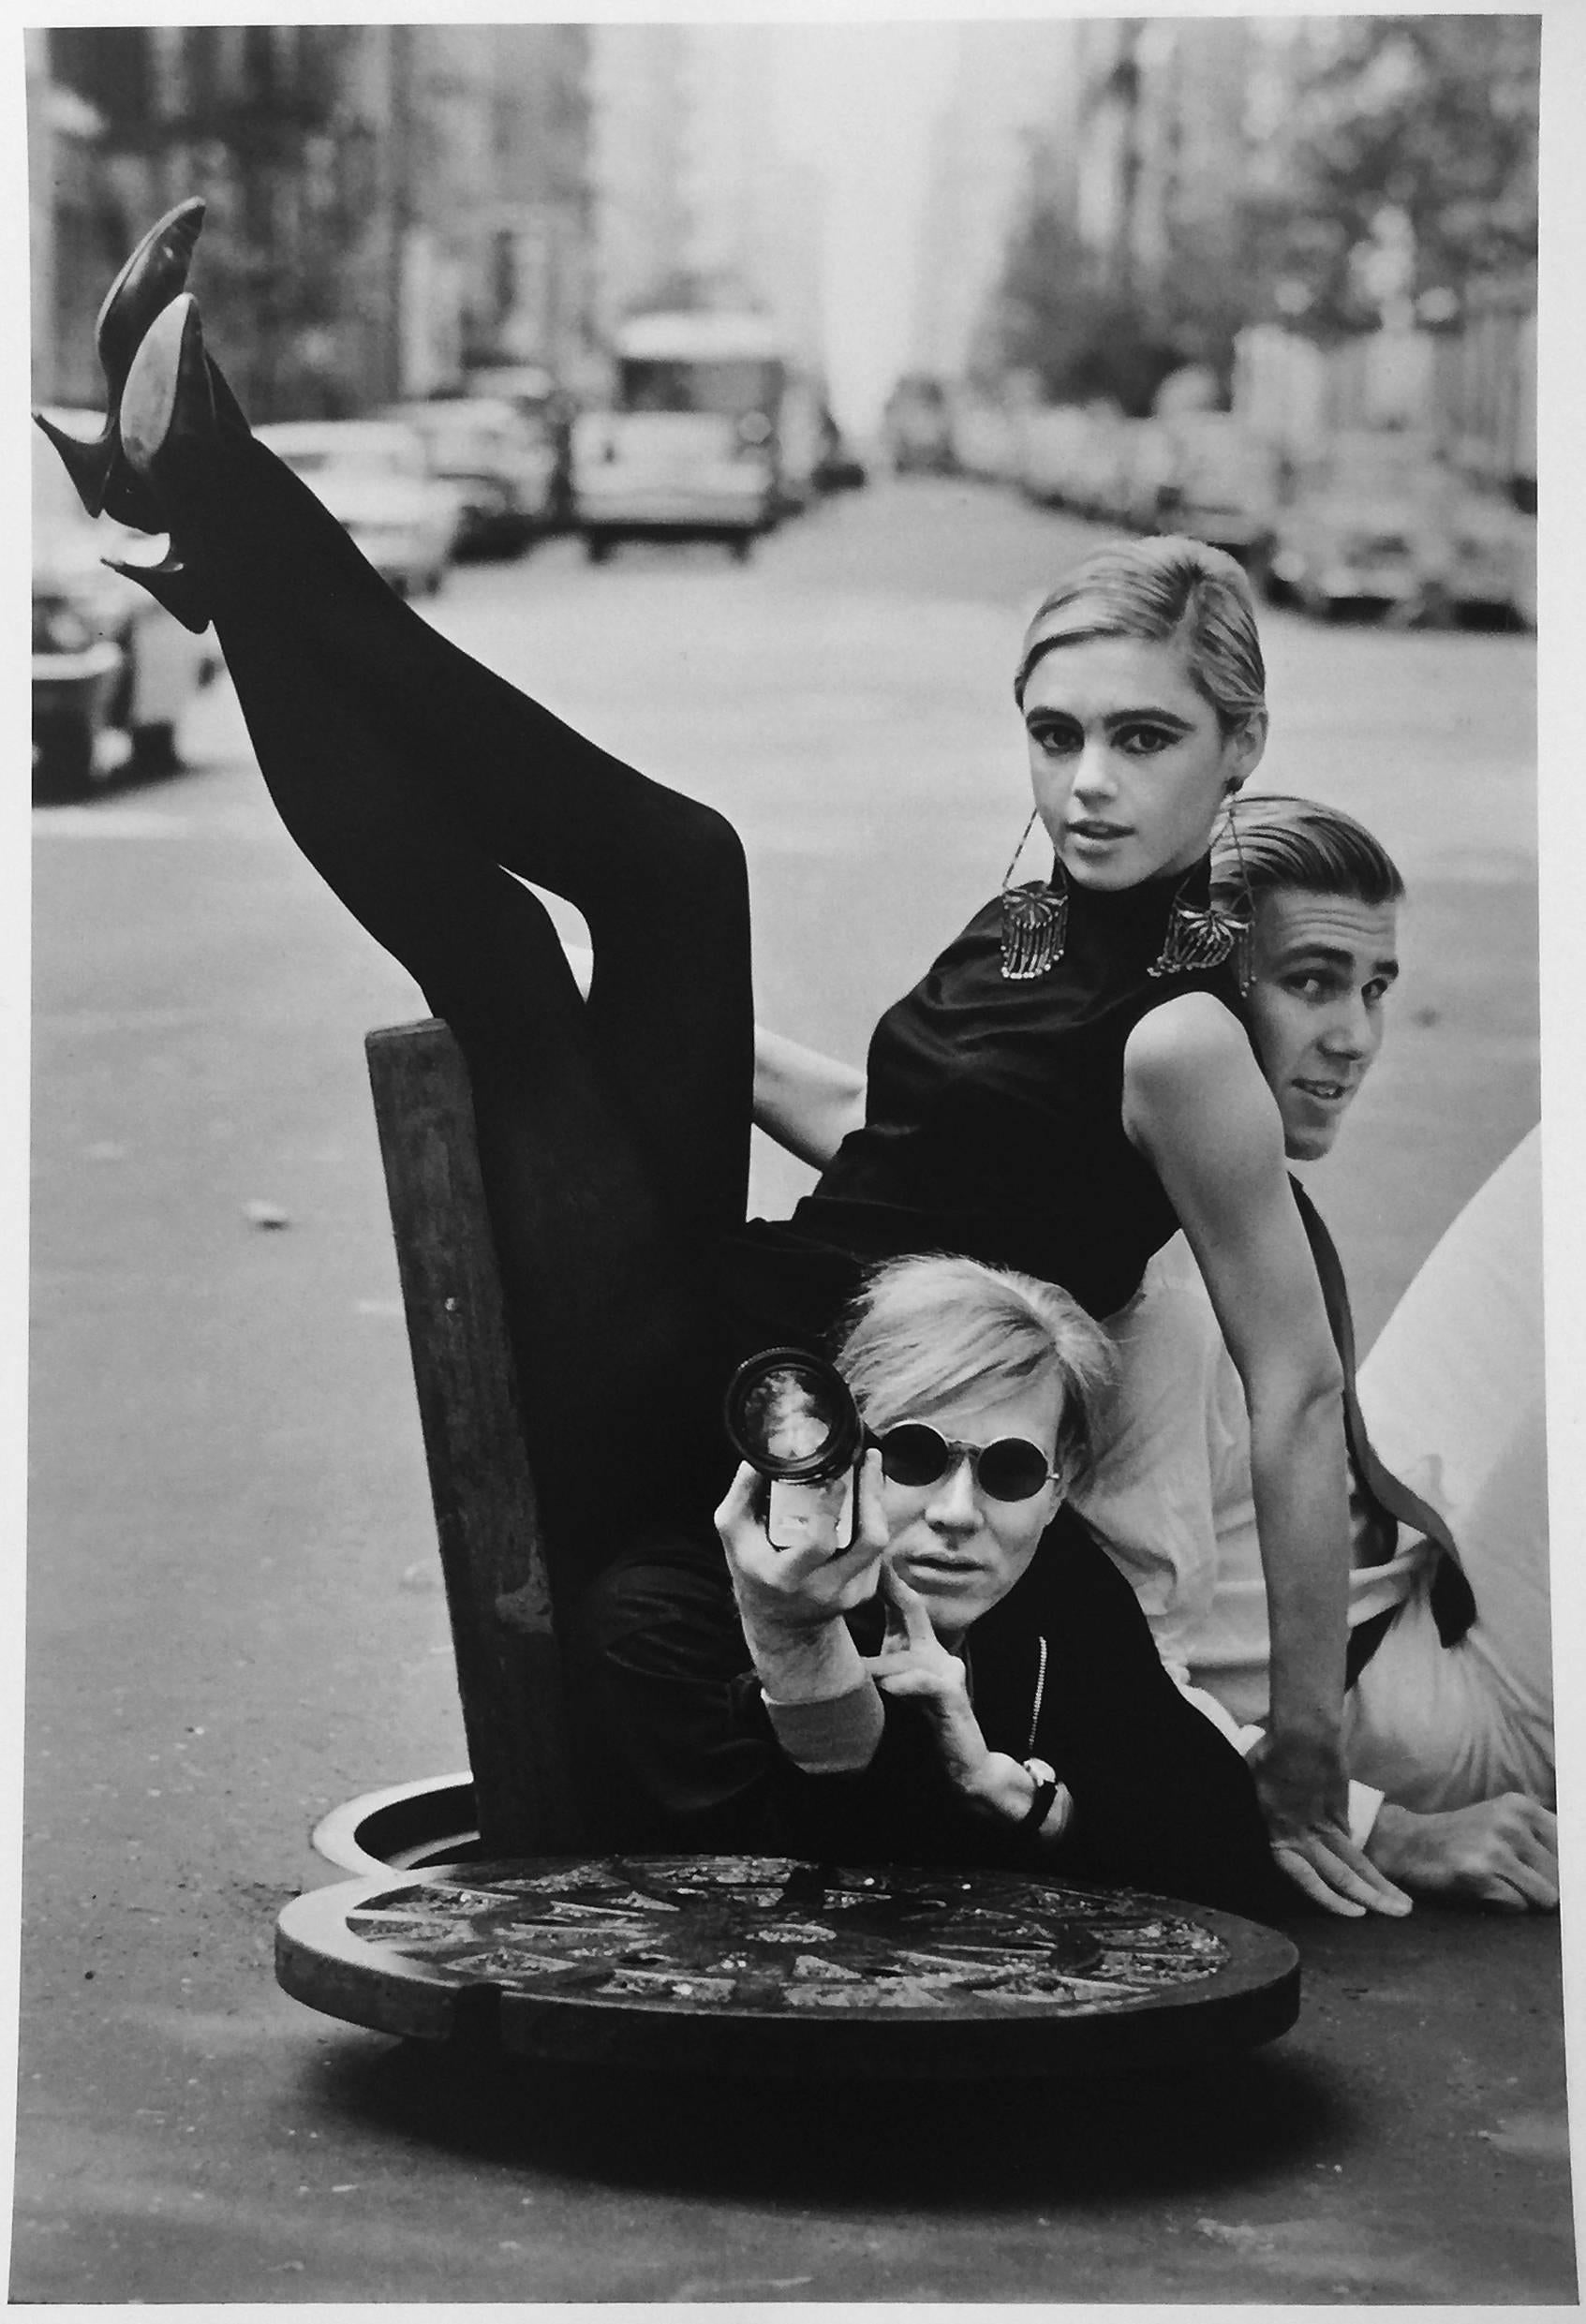 Burt Glinn Black and White Photograph - Andy Warhol, Edie Sedgwick, Chuck Wein, Black and White Photo Pop Stars 1960s 